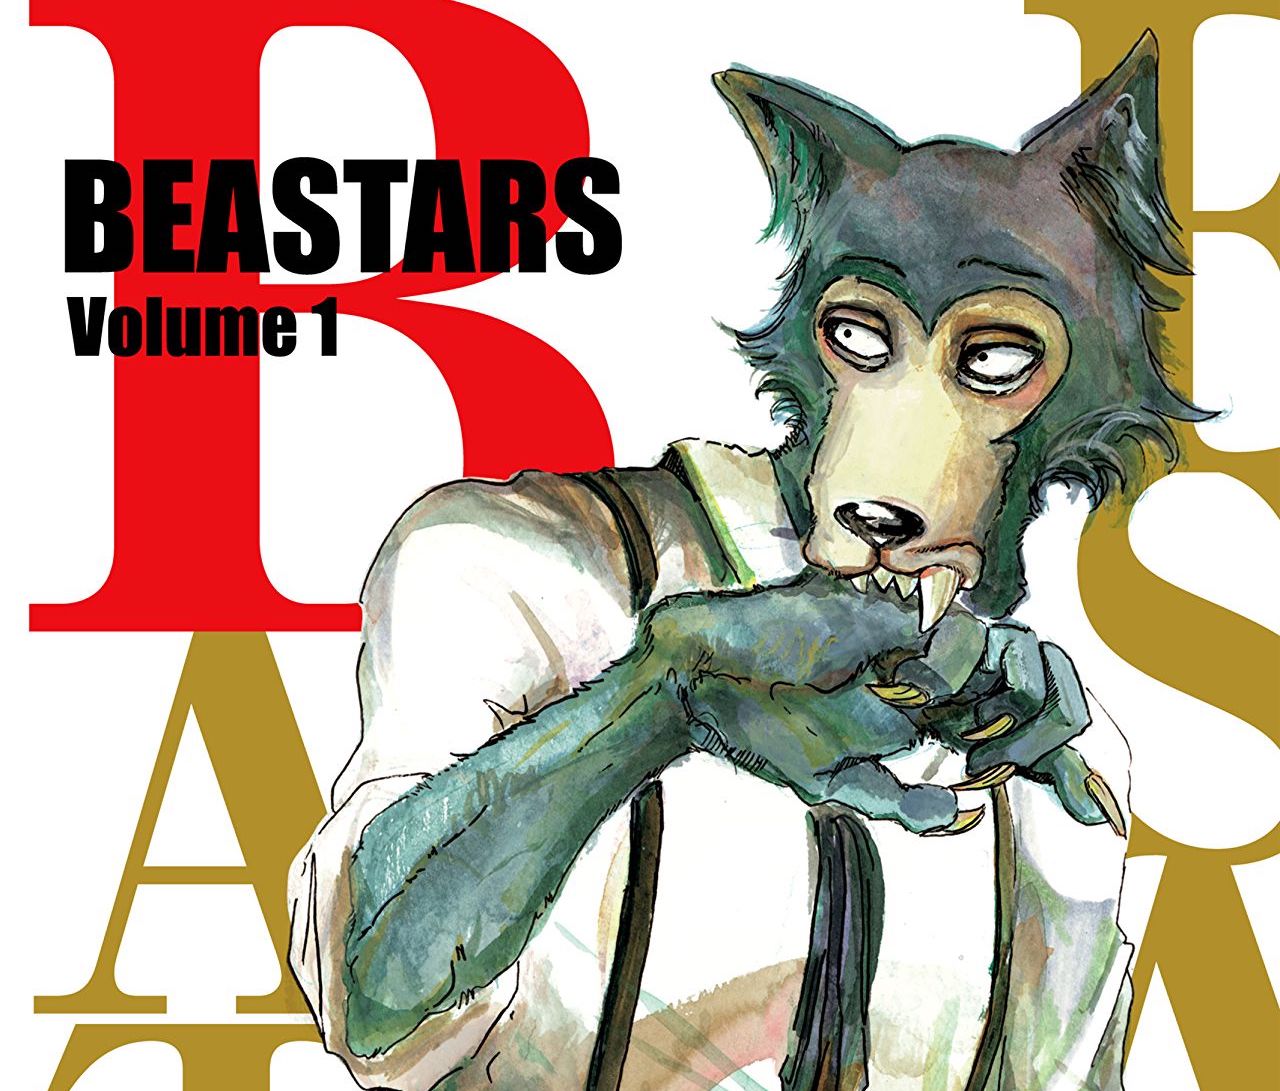 Beastars Vol. 1 Review